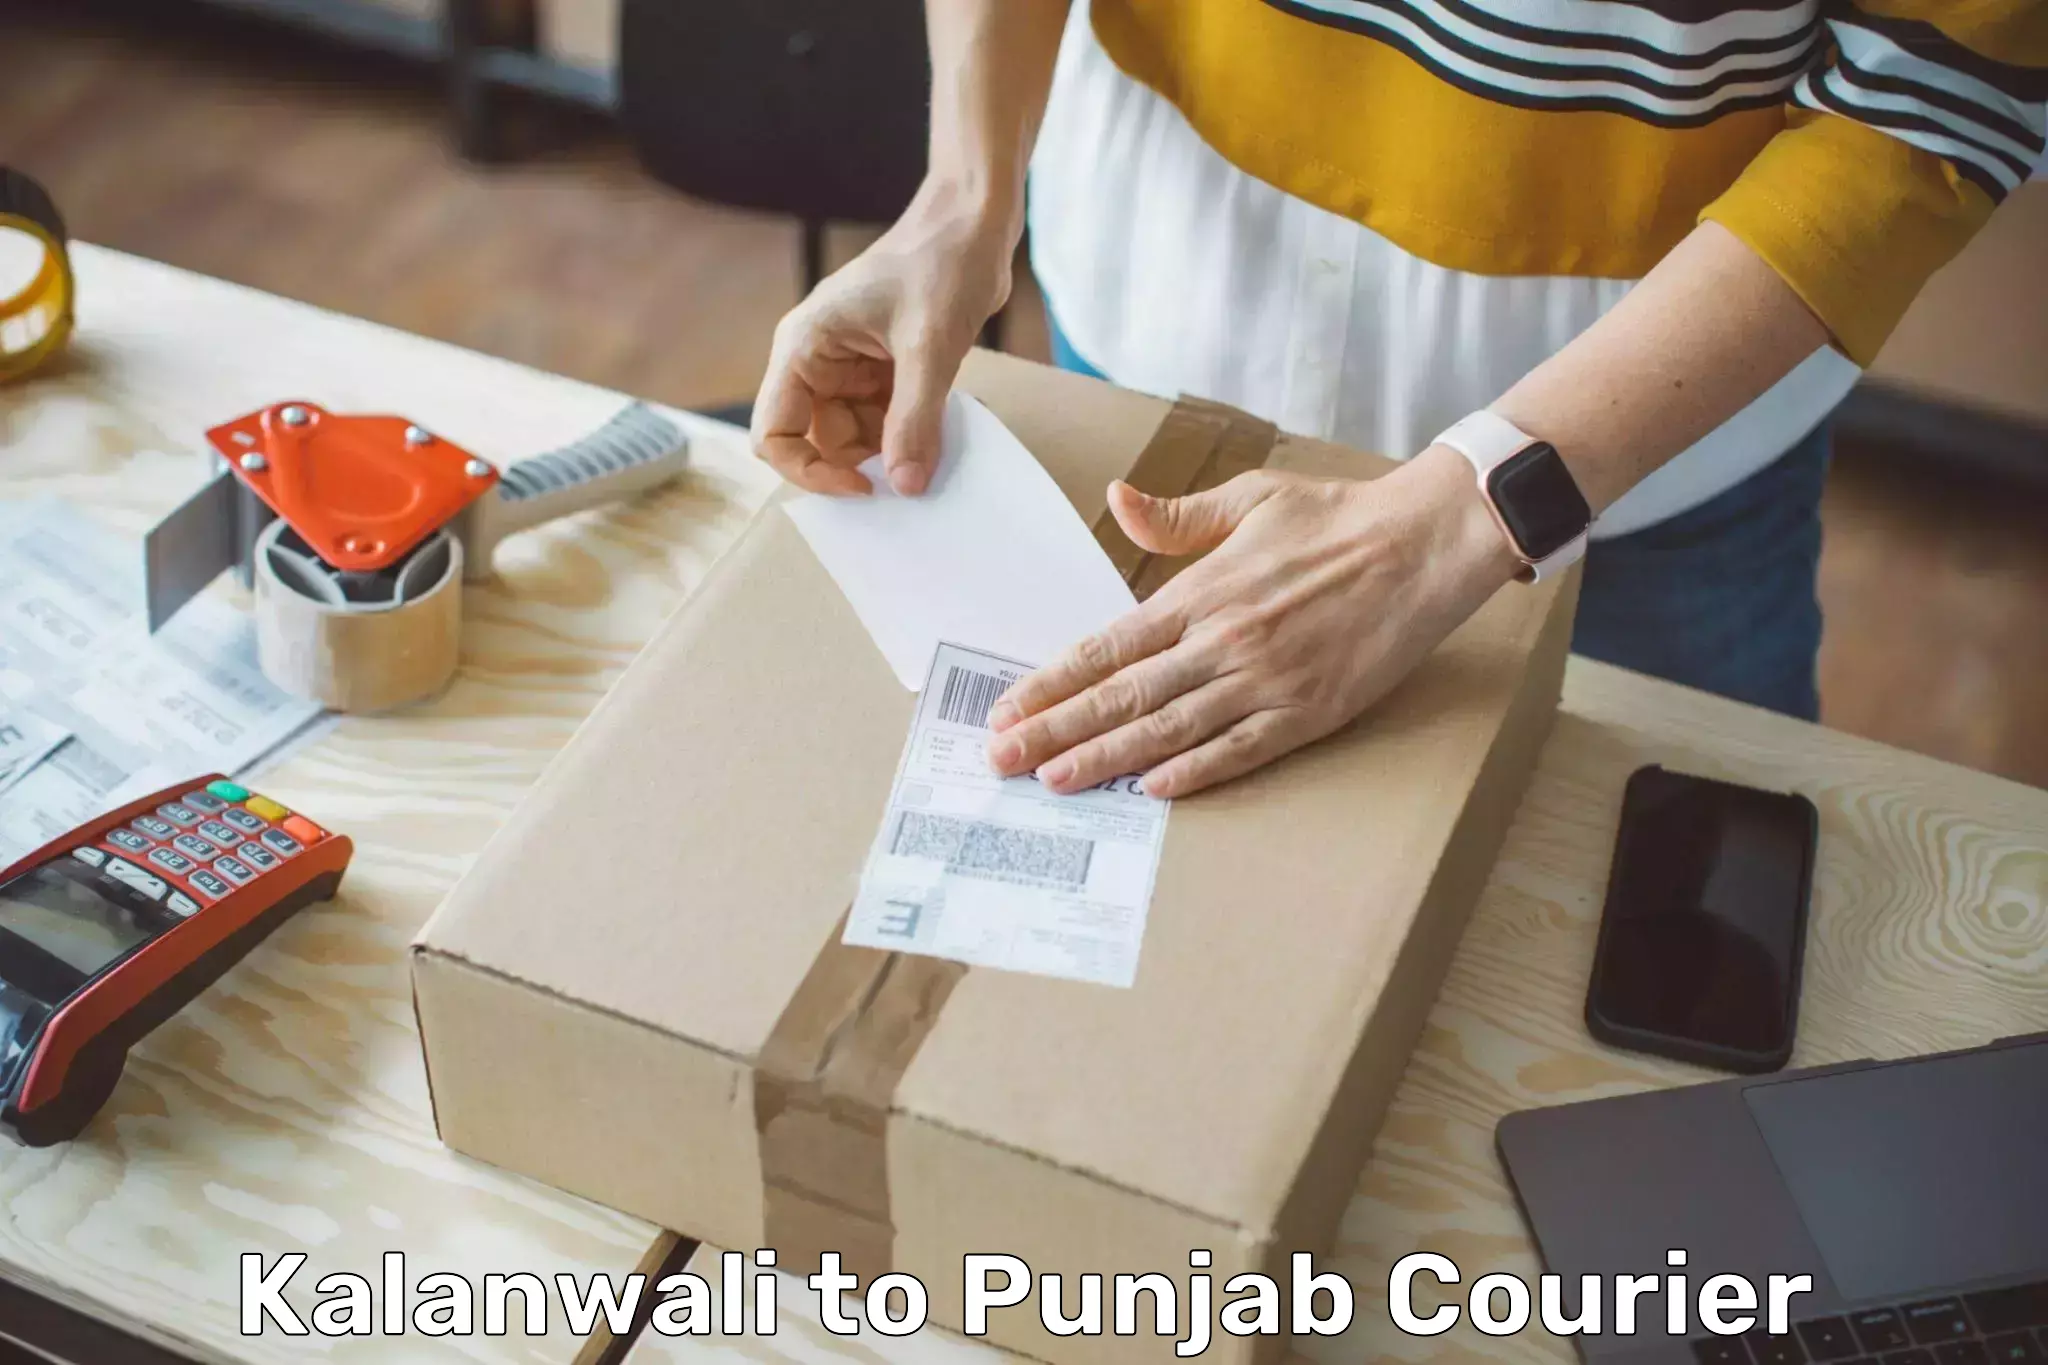 Shipping and handling Kalanwali to Punjab